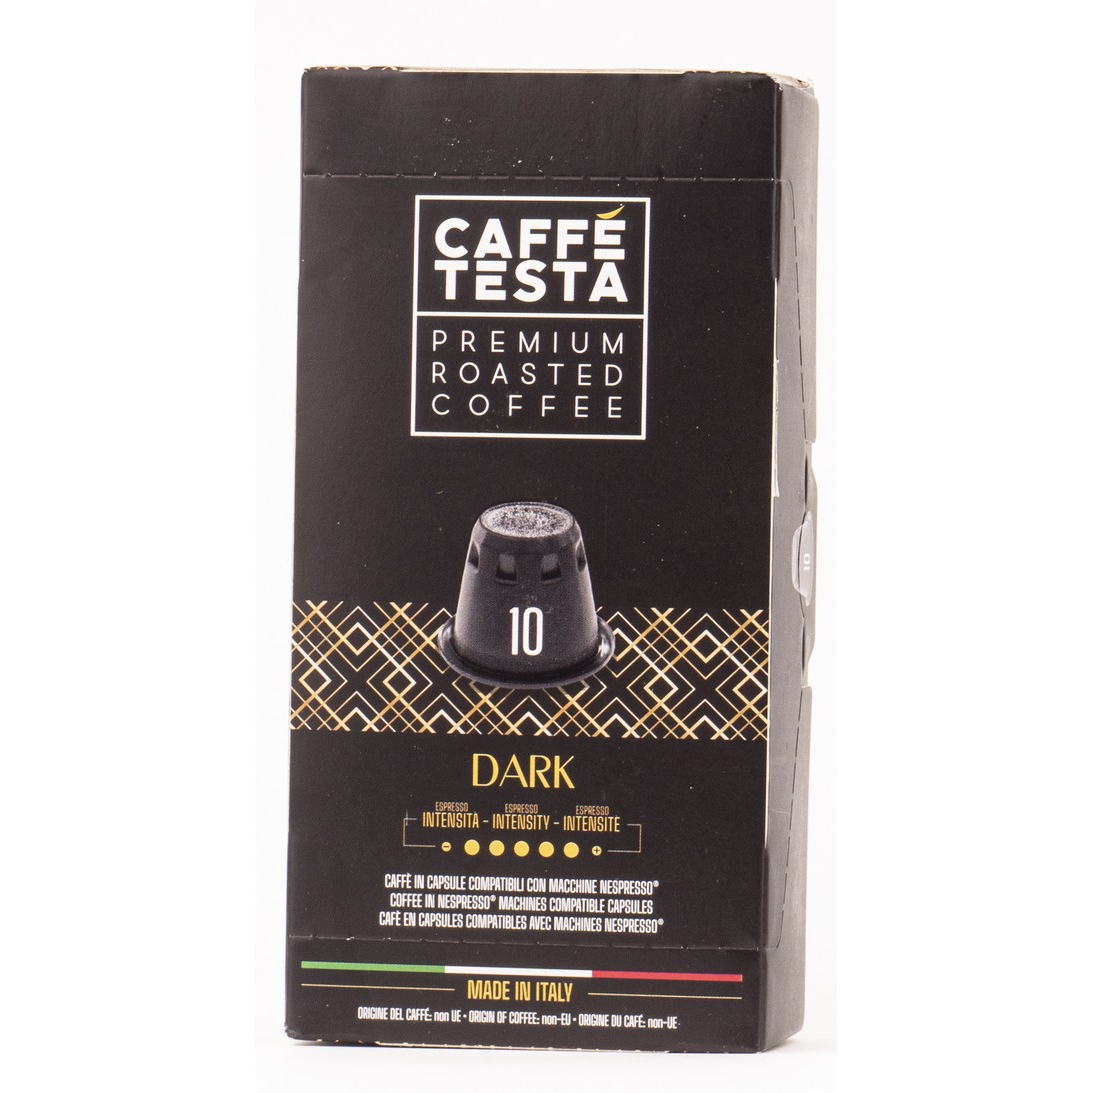 Кофе Caffe Testa Dark в капсулах 20/80, 55 г кофе в капсулах diemme caffe spirito della tanzania 50 шт